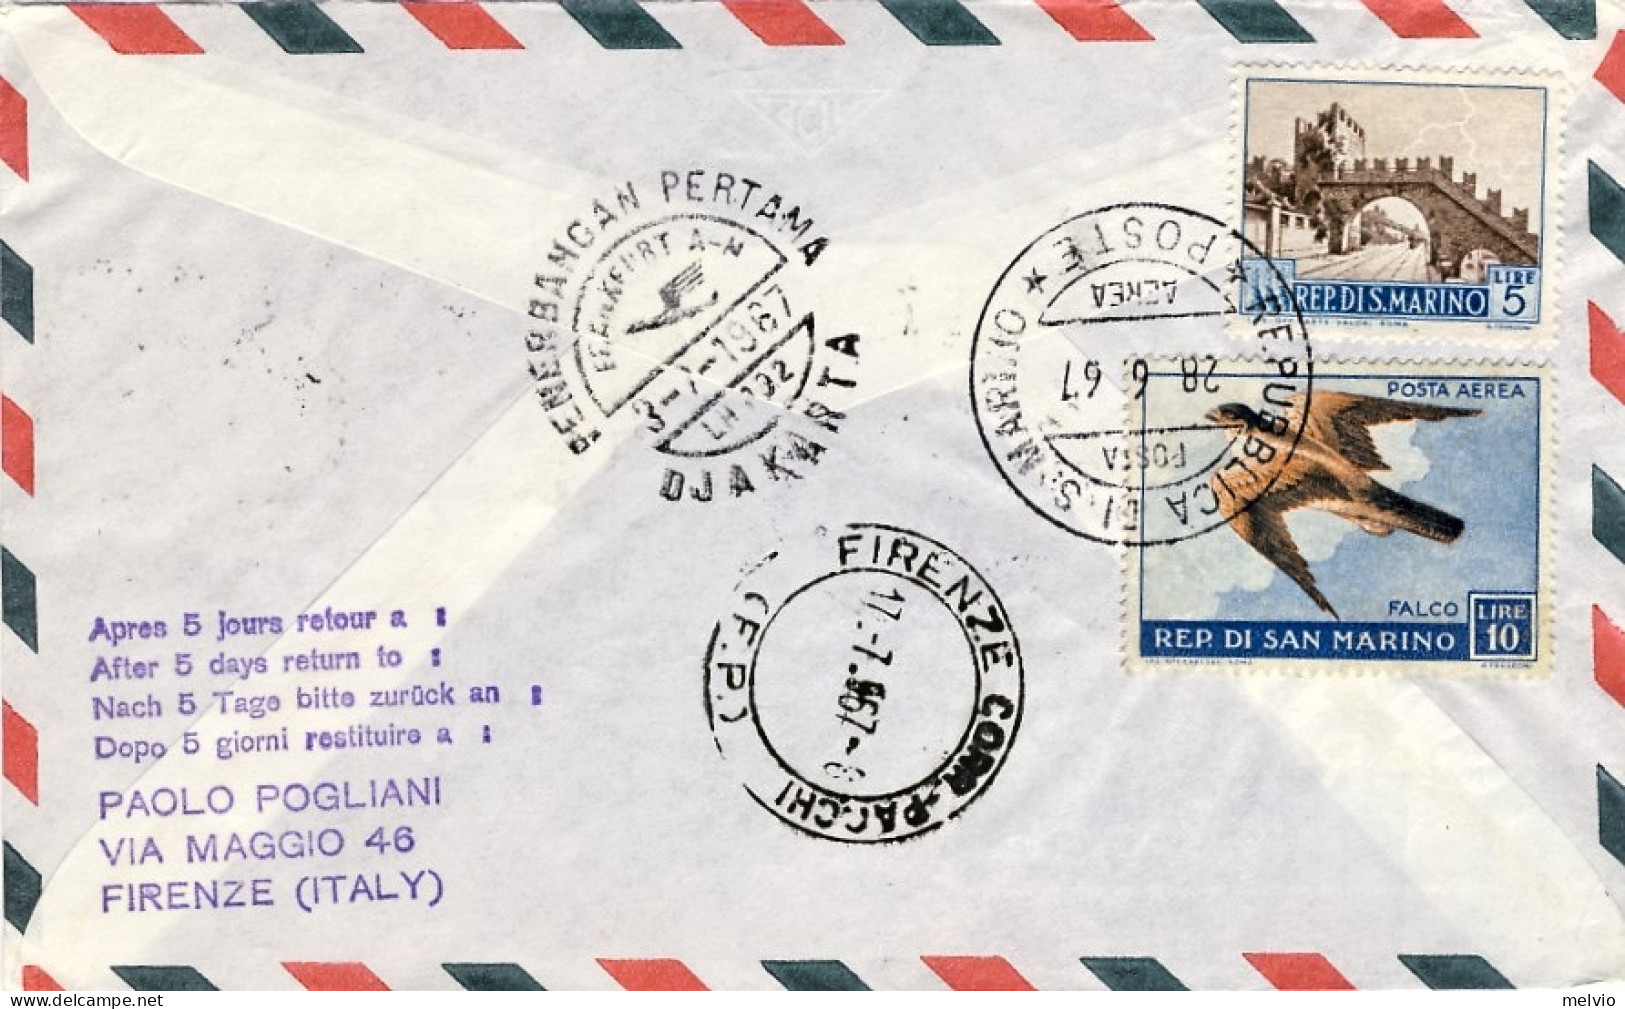 San Marino-1967 I^volo Lufthansa LH 692 Francoforte-Djakarta - Airmail